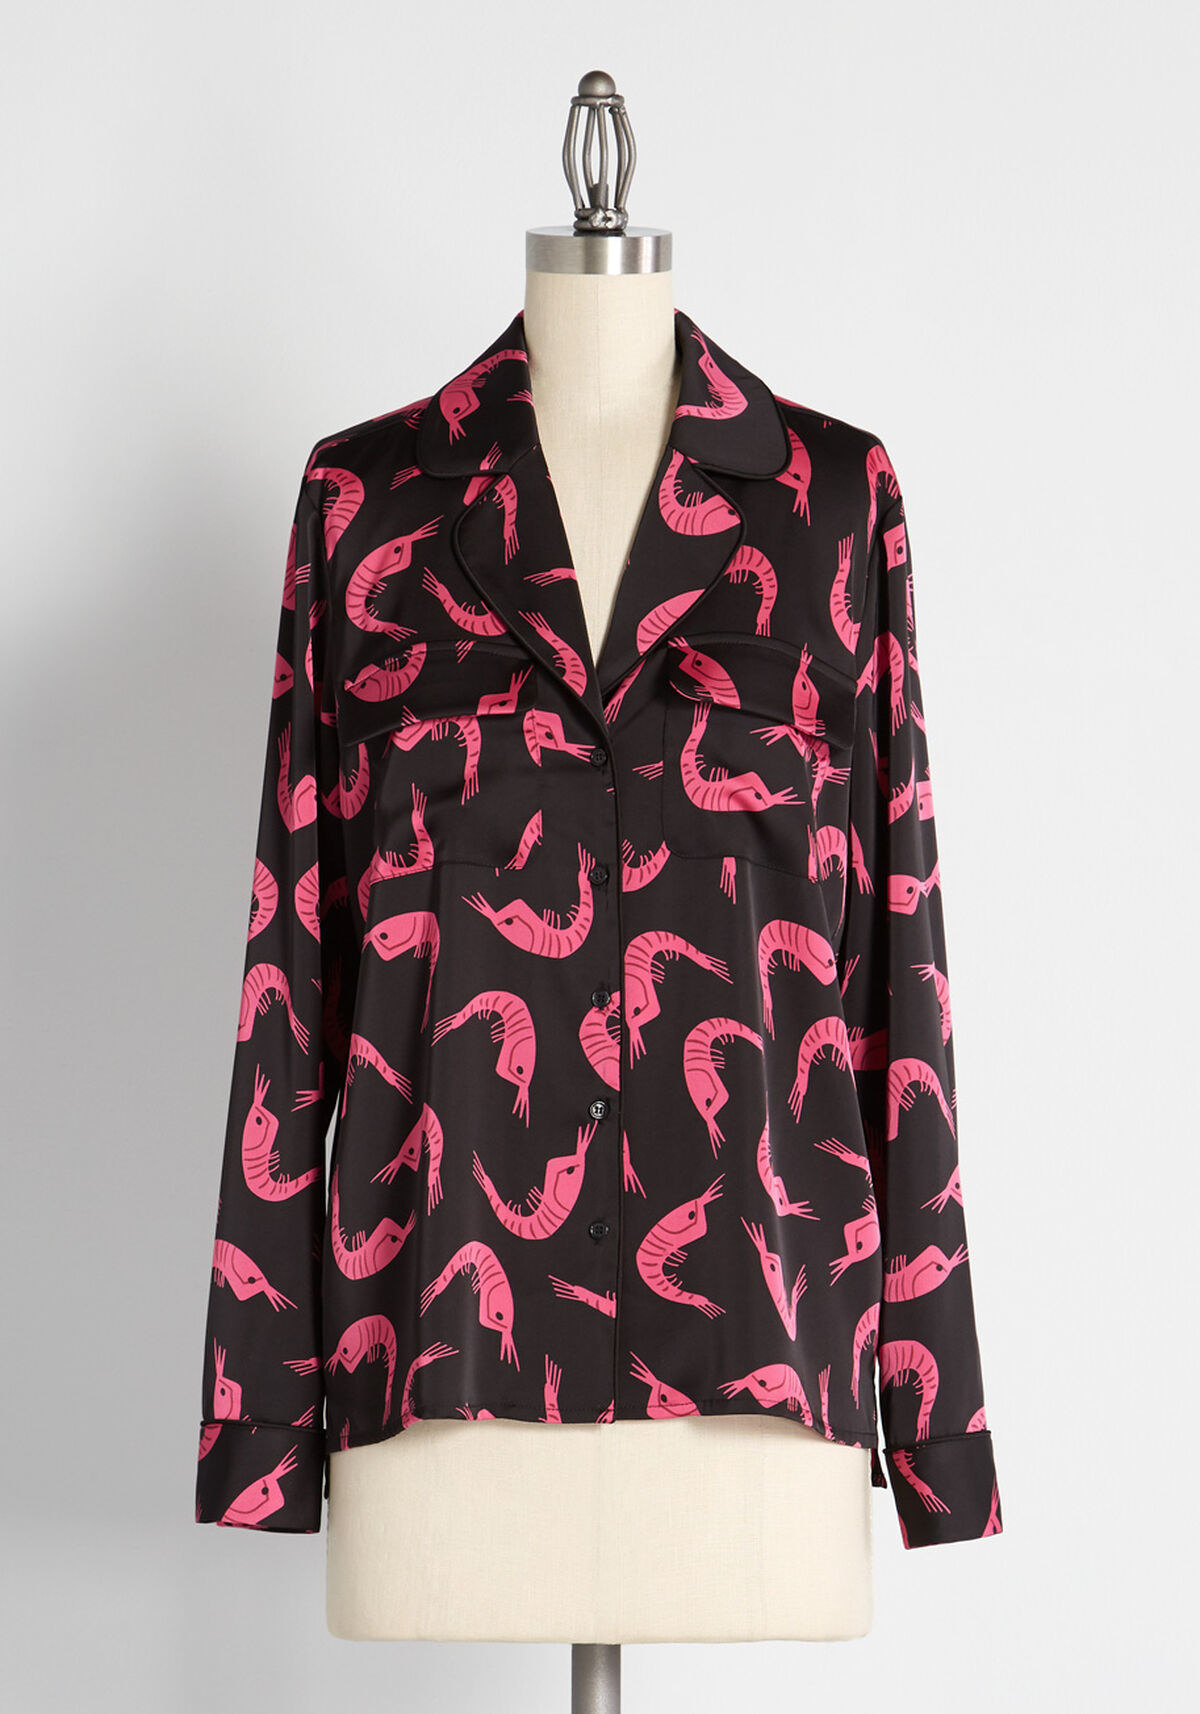 Black blouse with pink shrimp print